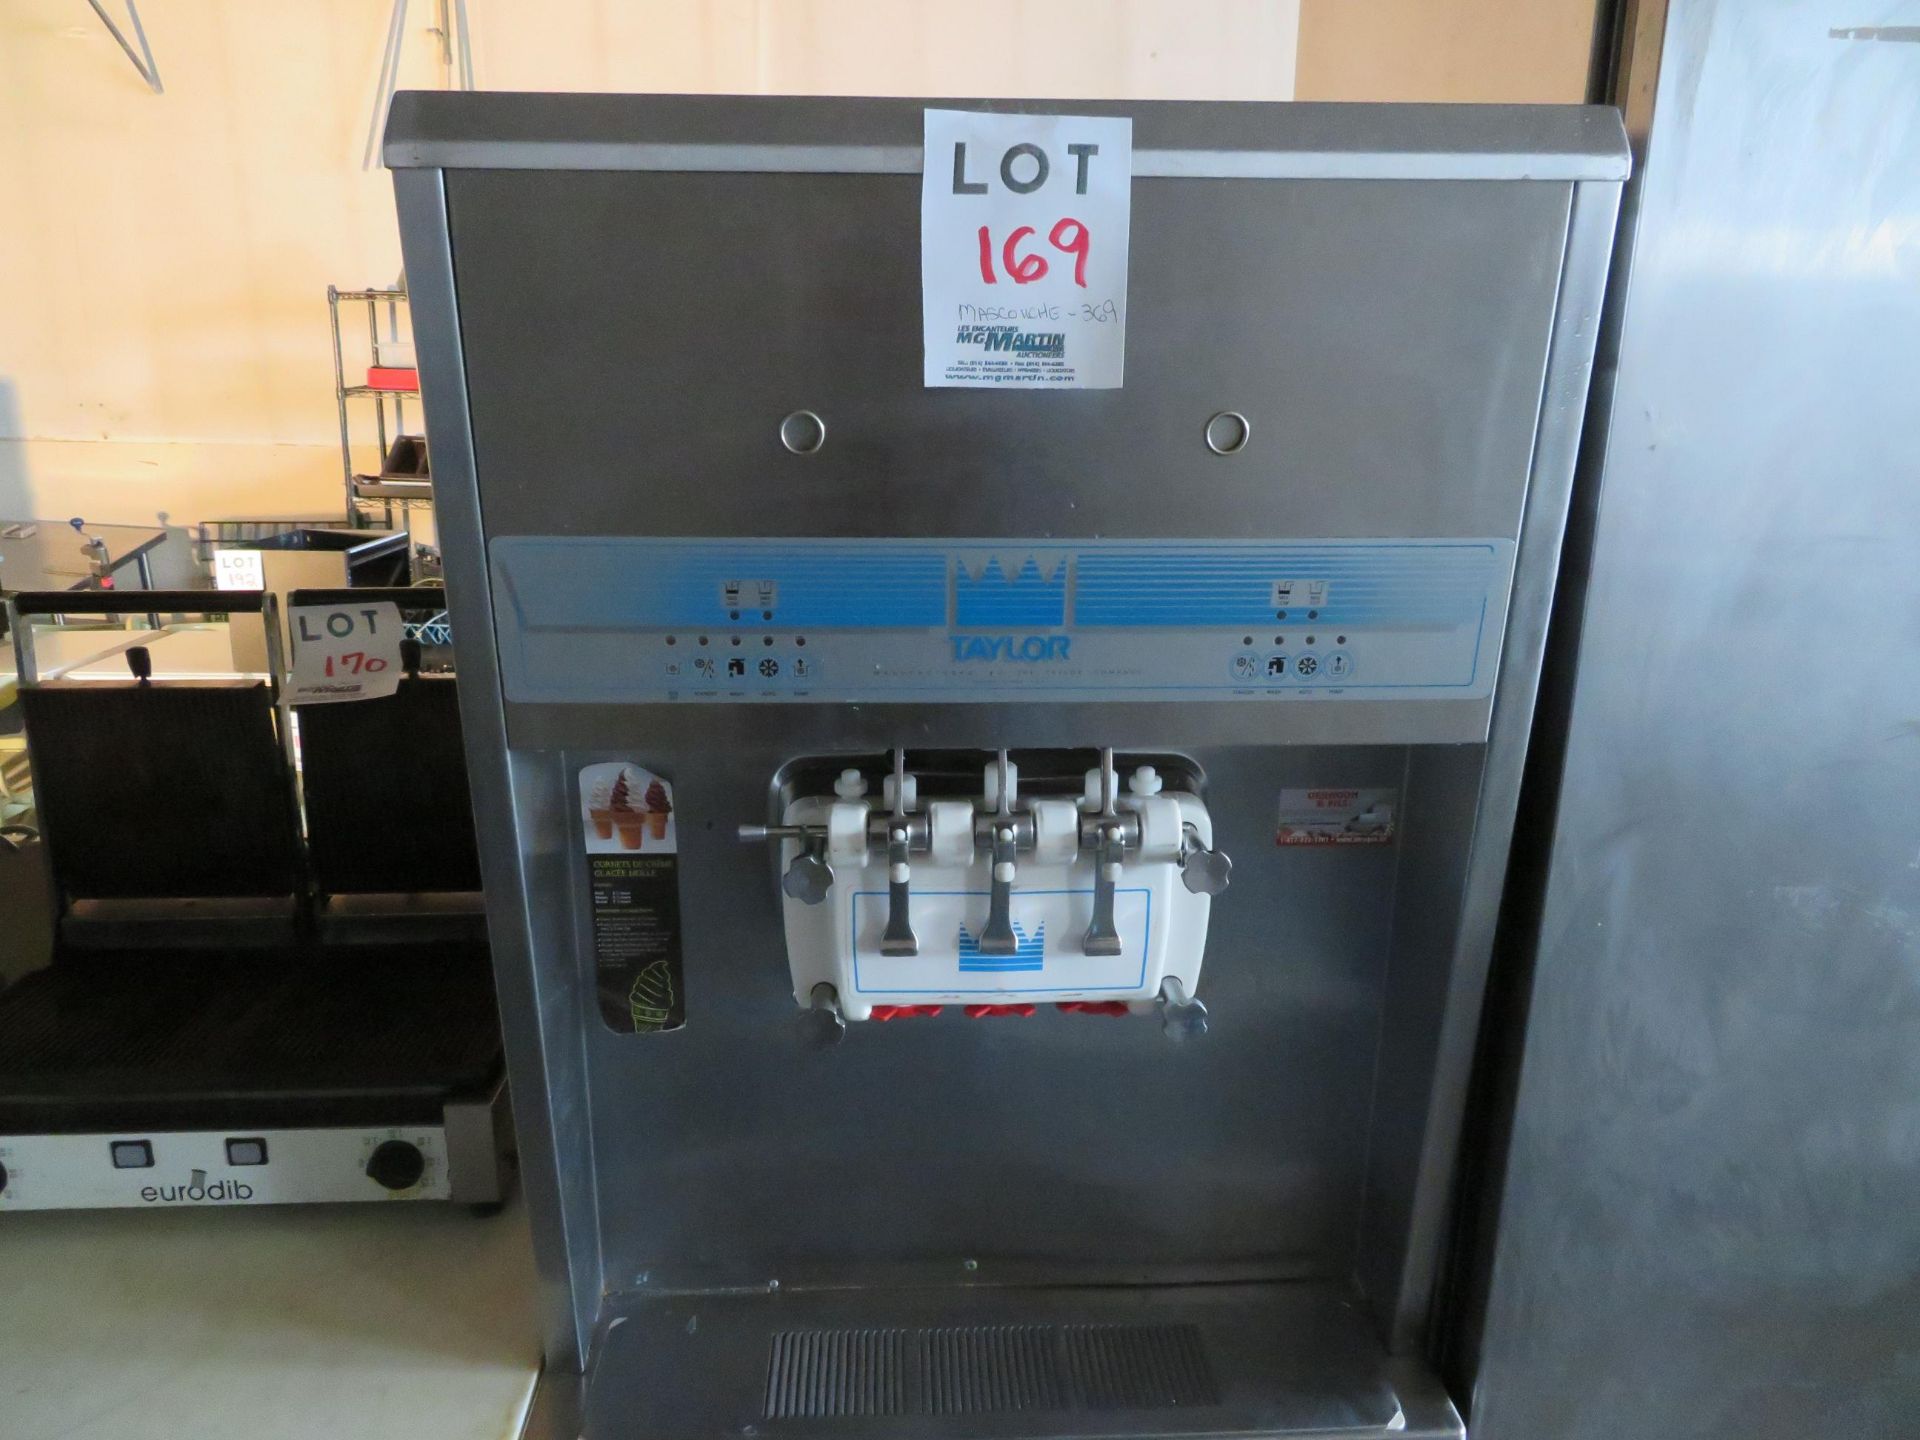 TAYLOR ice cream machine, Mod #8756-33, approx. 26"w x 36"d x 68"h - Image 2 of 4